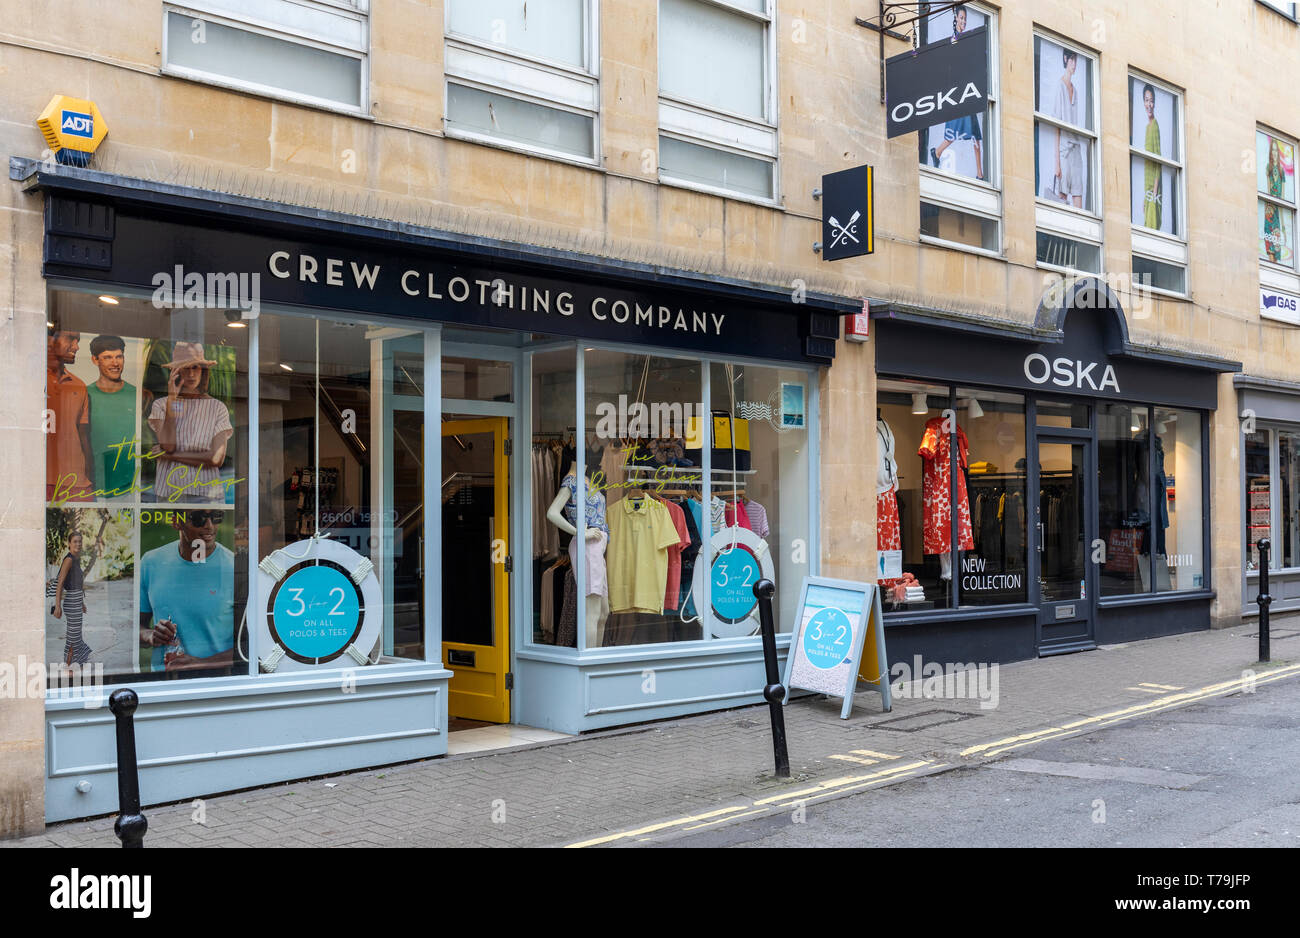 Crew Clothing Company and Oska stores in Upper Borough Walls, Bath, England, UK Stock Photo